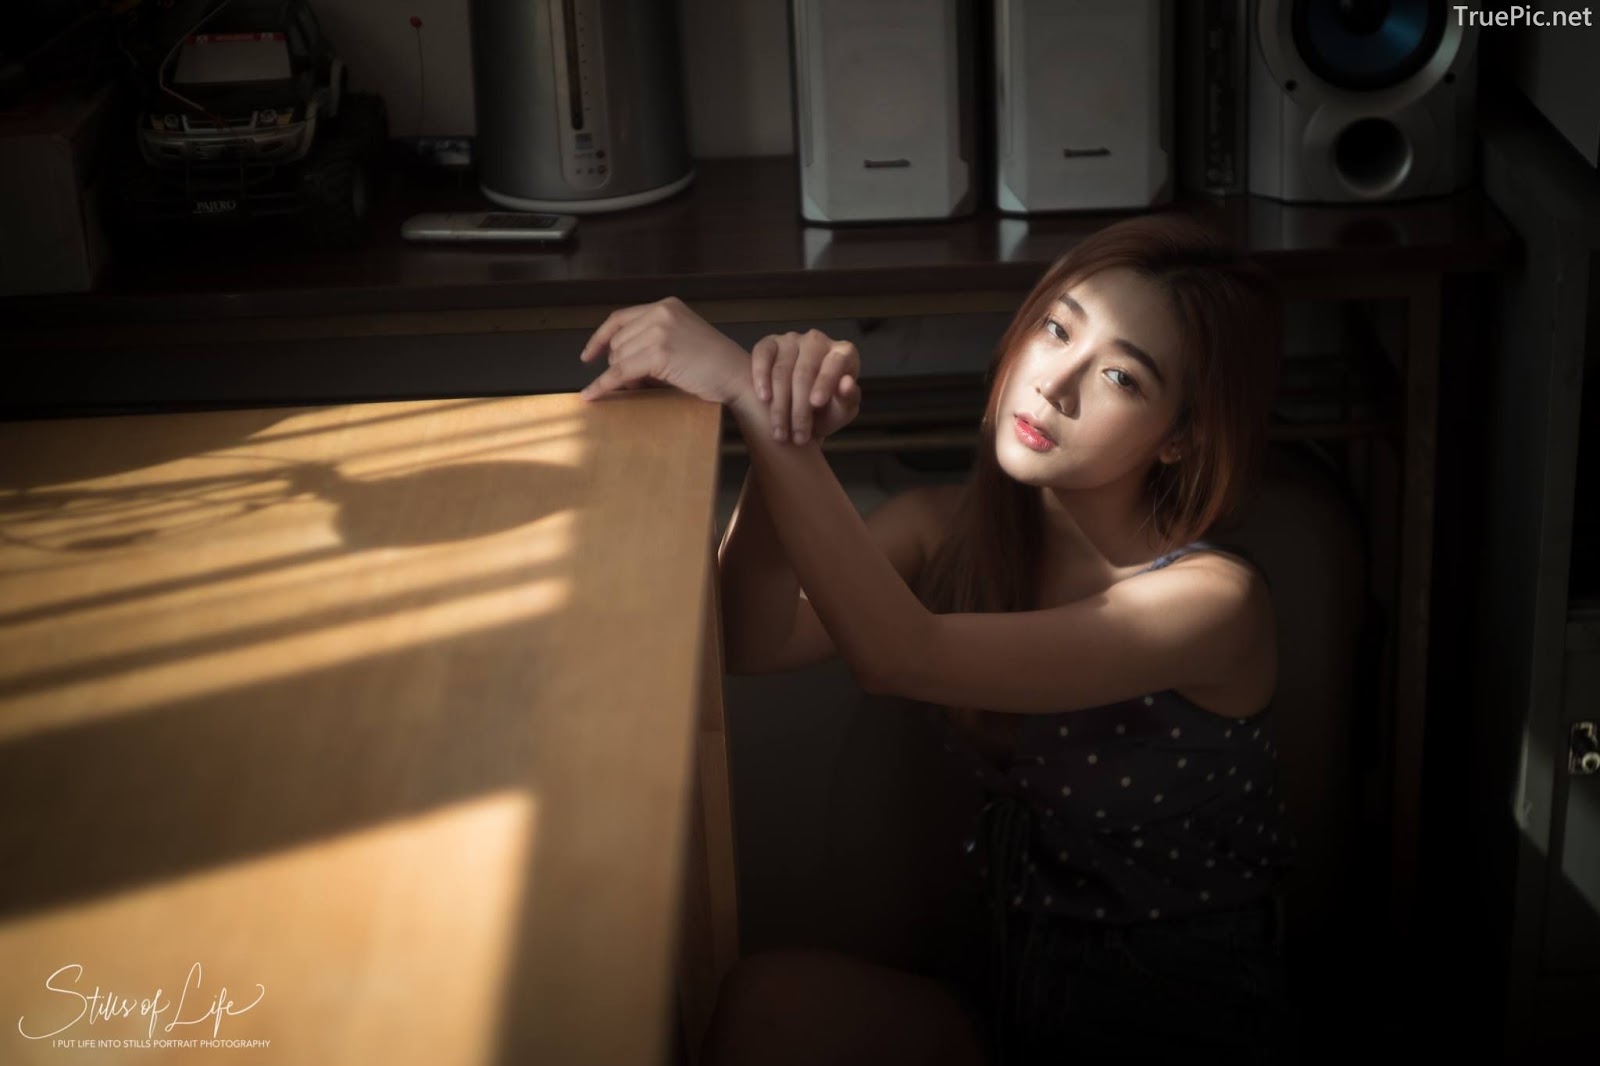 Thailand model Bunnada Na Ranong - Waiting for you - Photographer Apisak Kanjanapusit